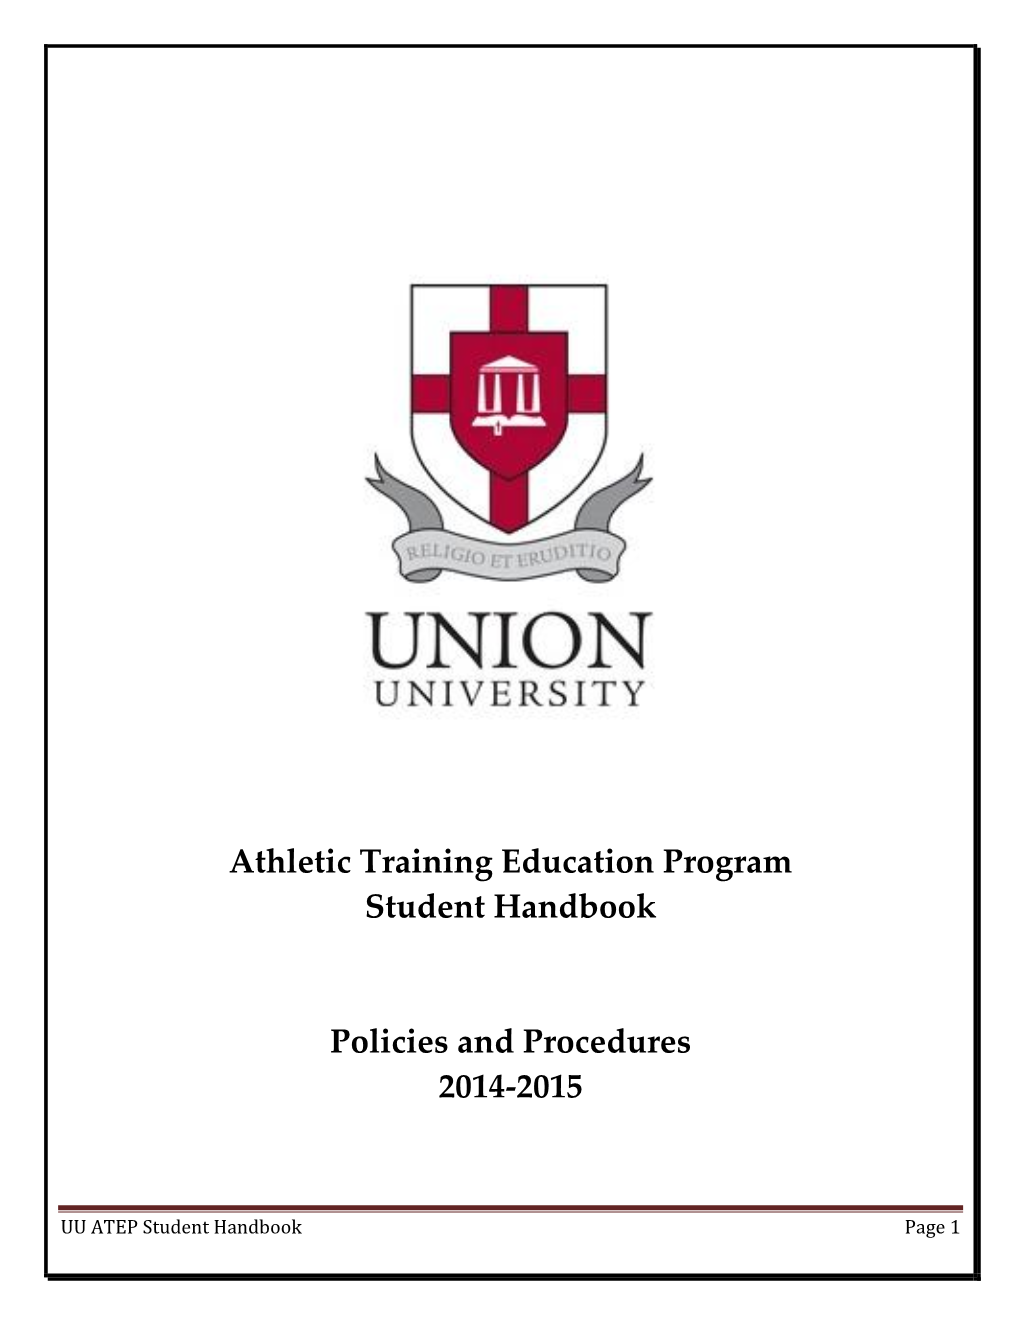 Athletic Training Education Program Student Handbook Policies And